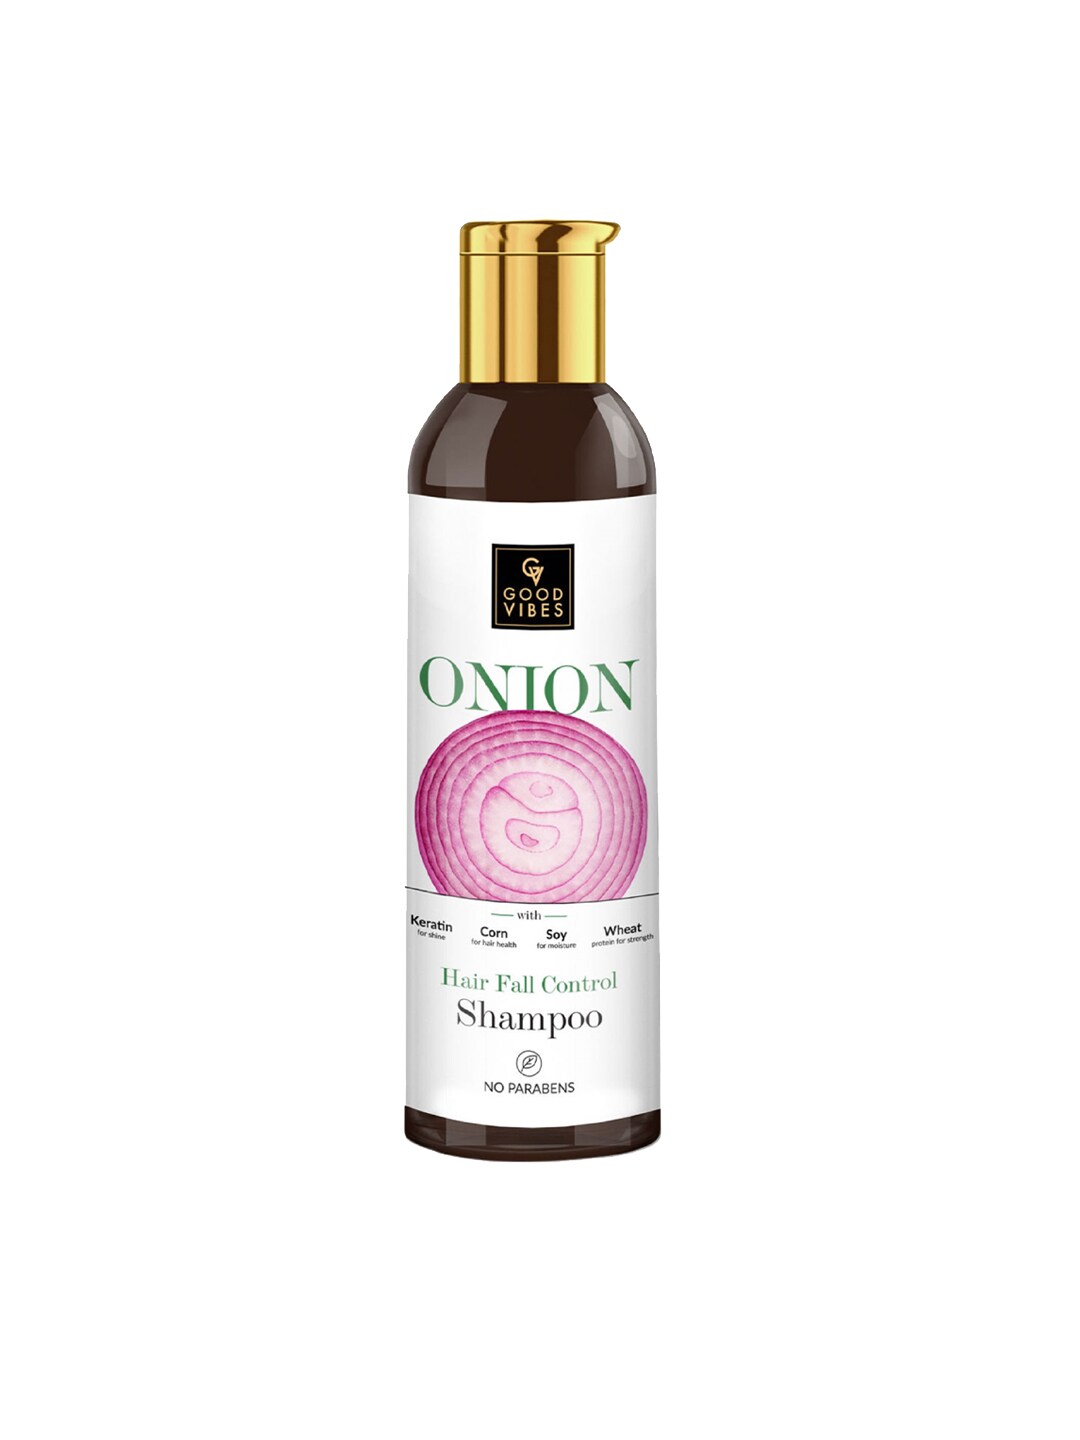 Good Vibes Onion Hairfall Control Shampoo 200 ml Price in India